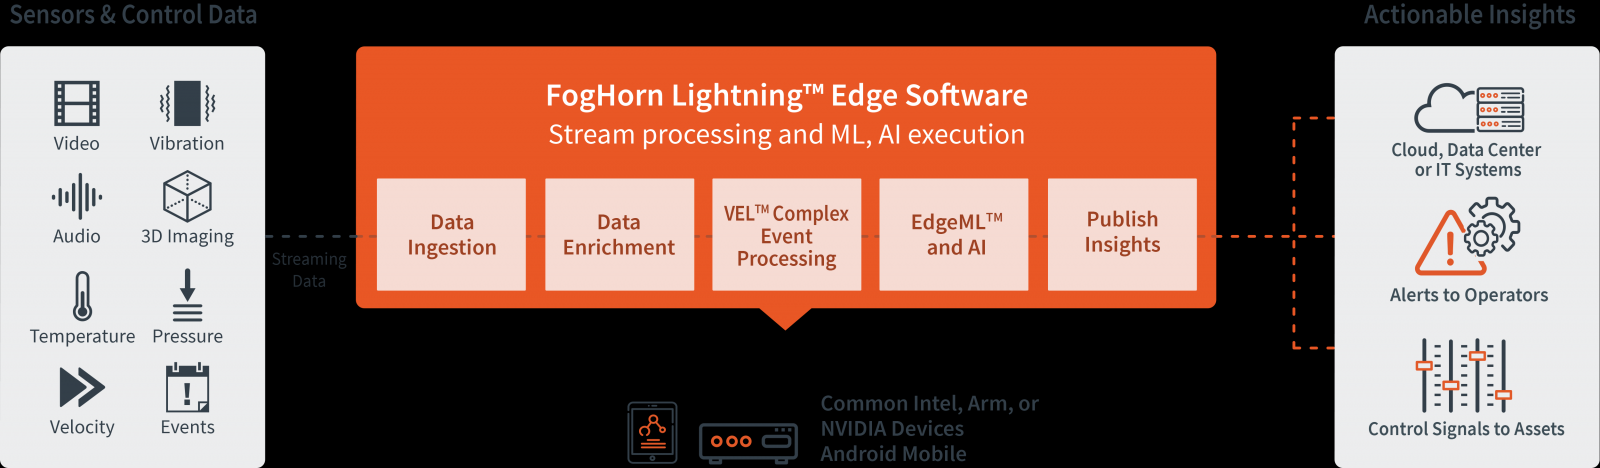 Edge AI Platform - FogHorn Lightning - FogHorn Systems